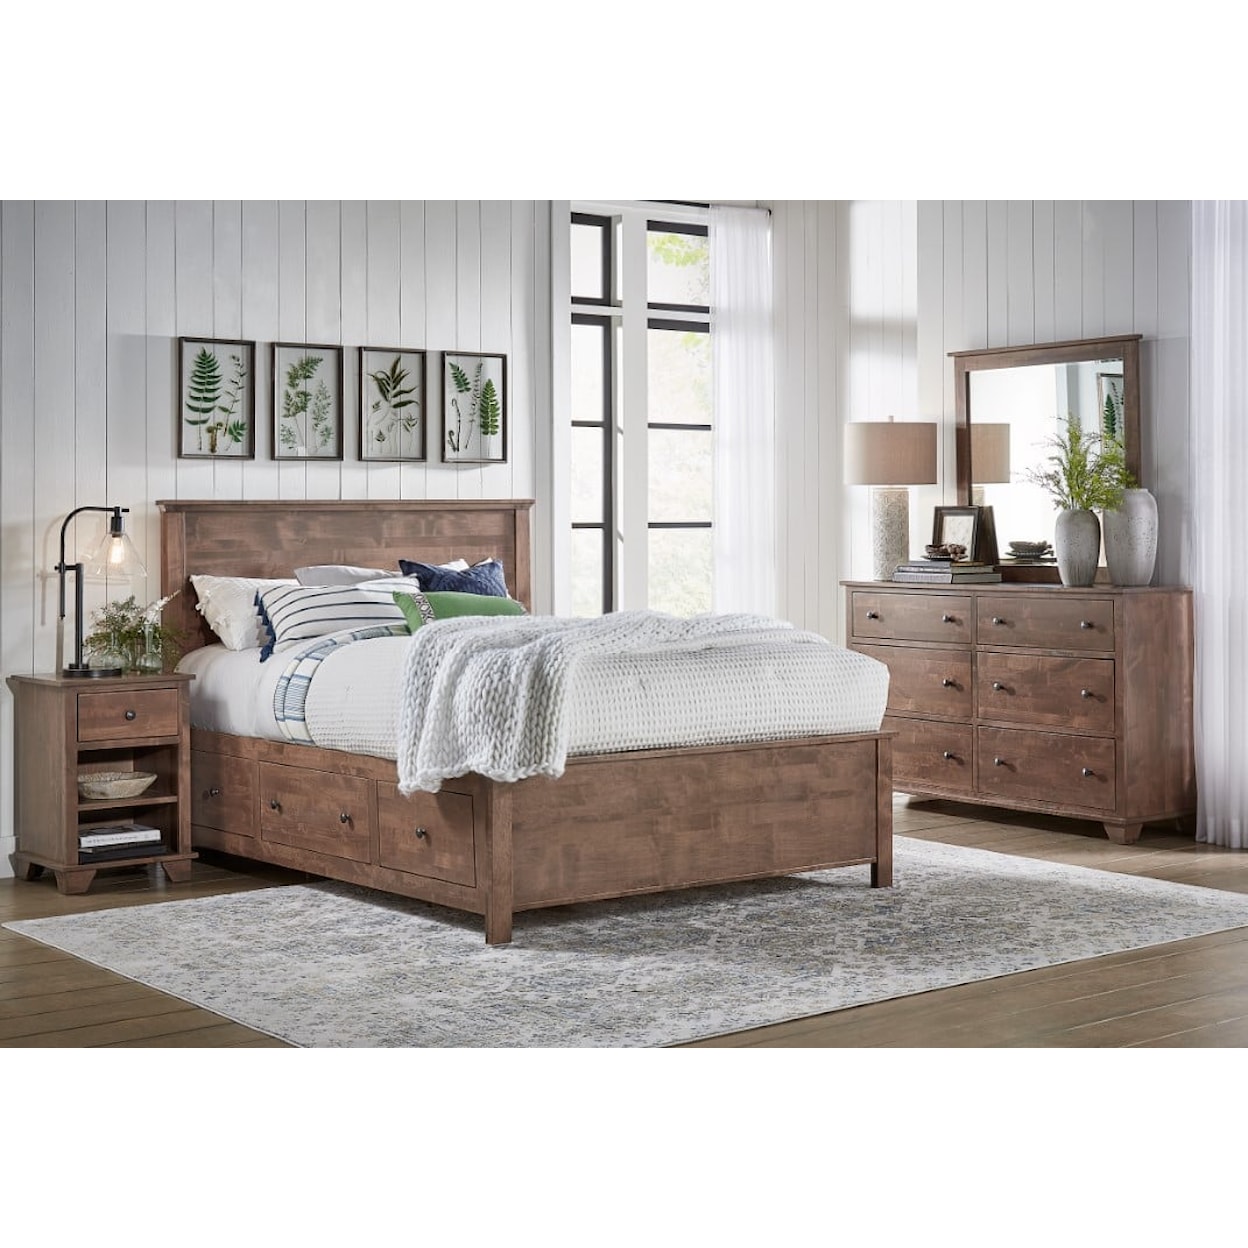 Archbold Furniture Portland Full Panel Shiplap Bed